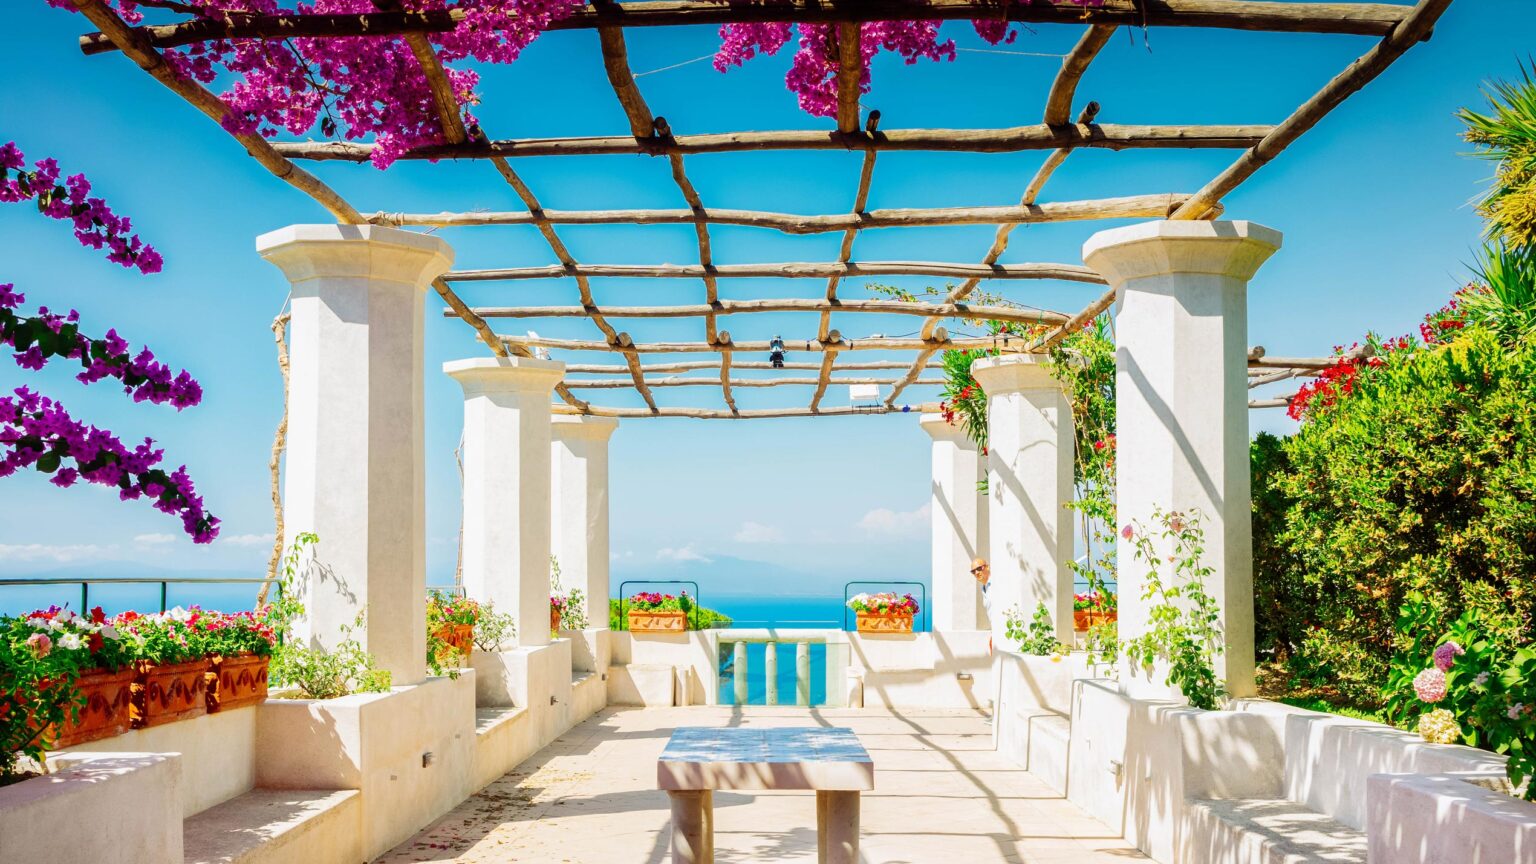 Capri Deep Seating Outdoor Furniture Set – Down to Earth Living